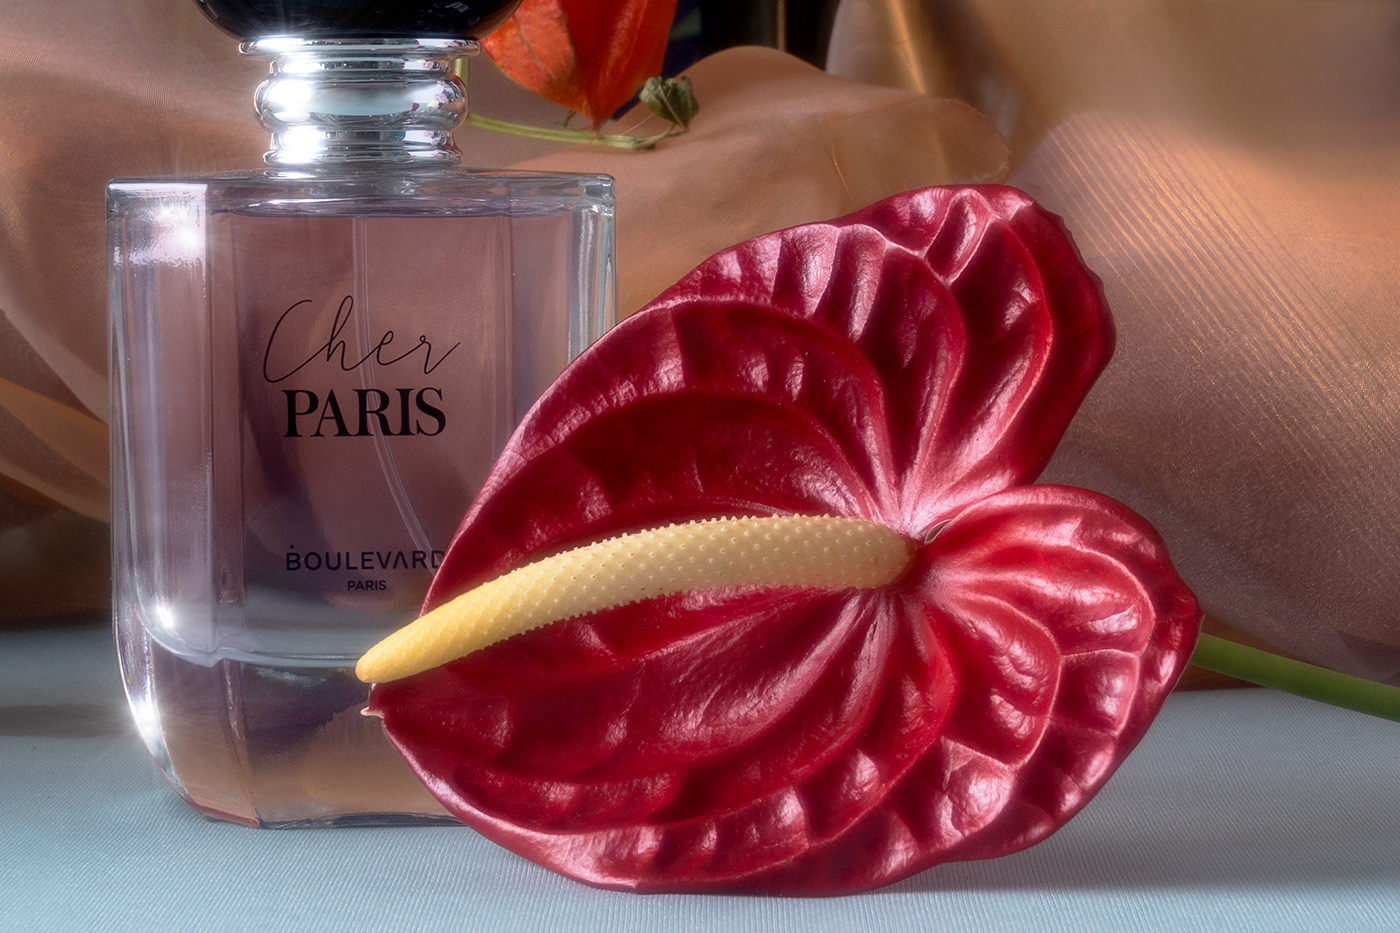 beauty cosmetics editorial Fragrance perfume still life luxury spring flower floral